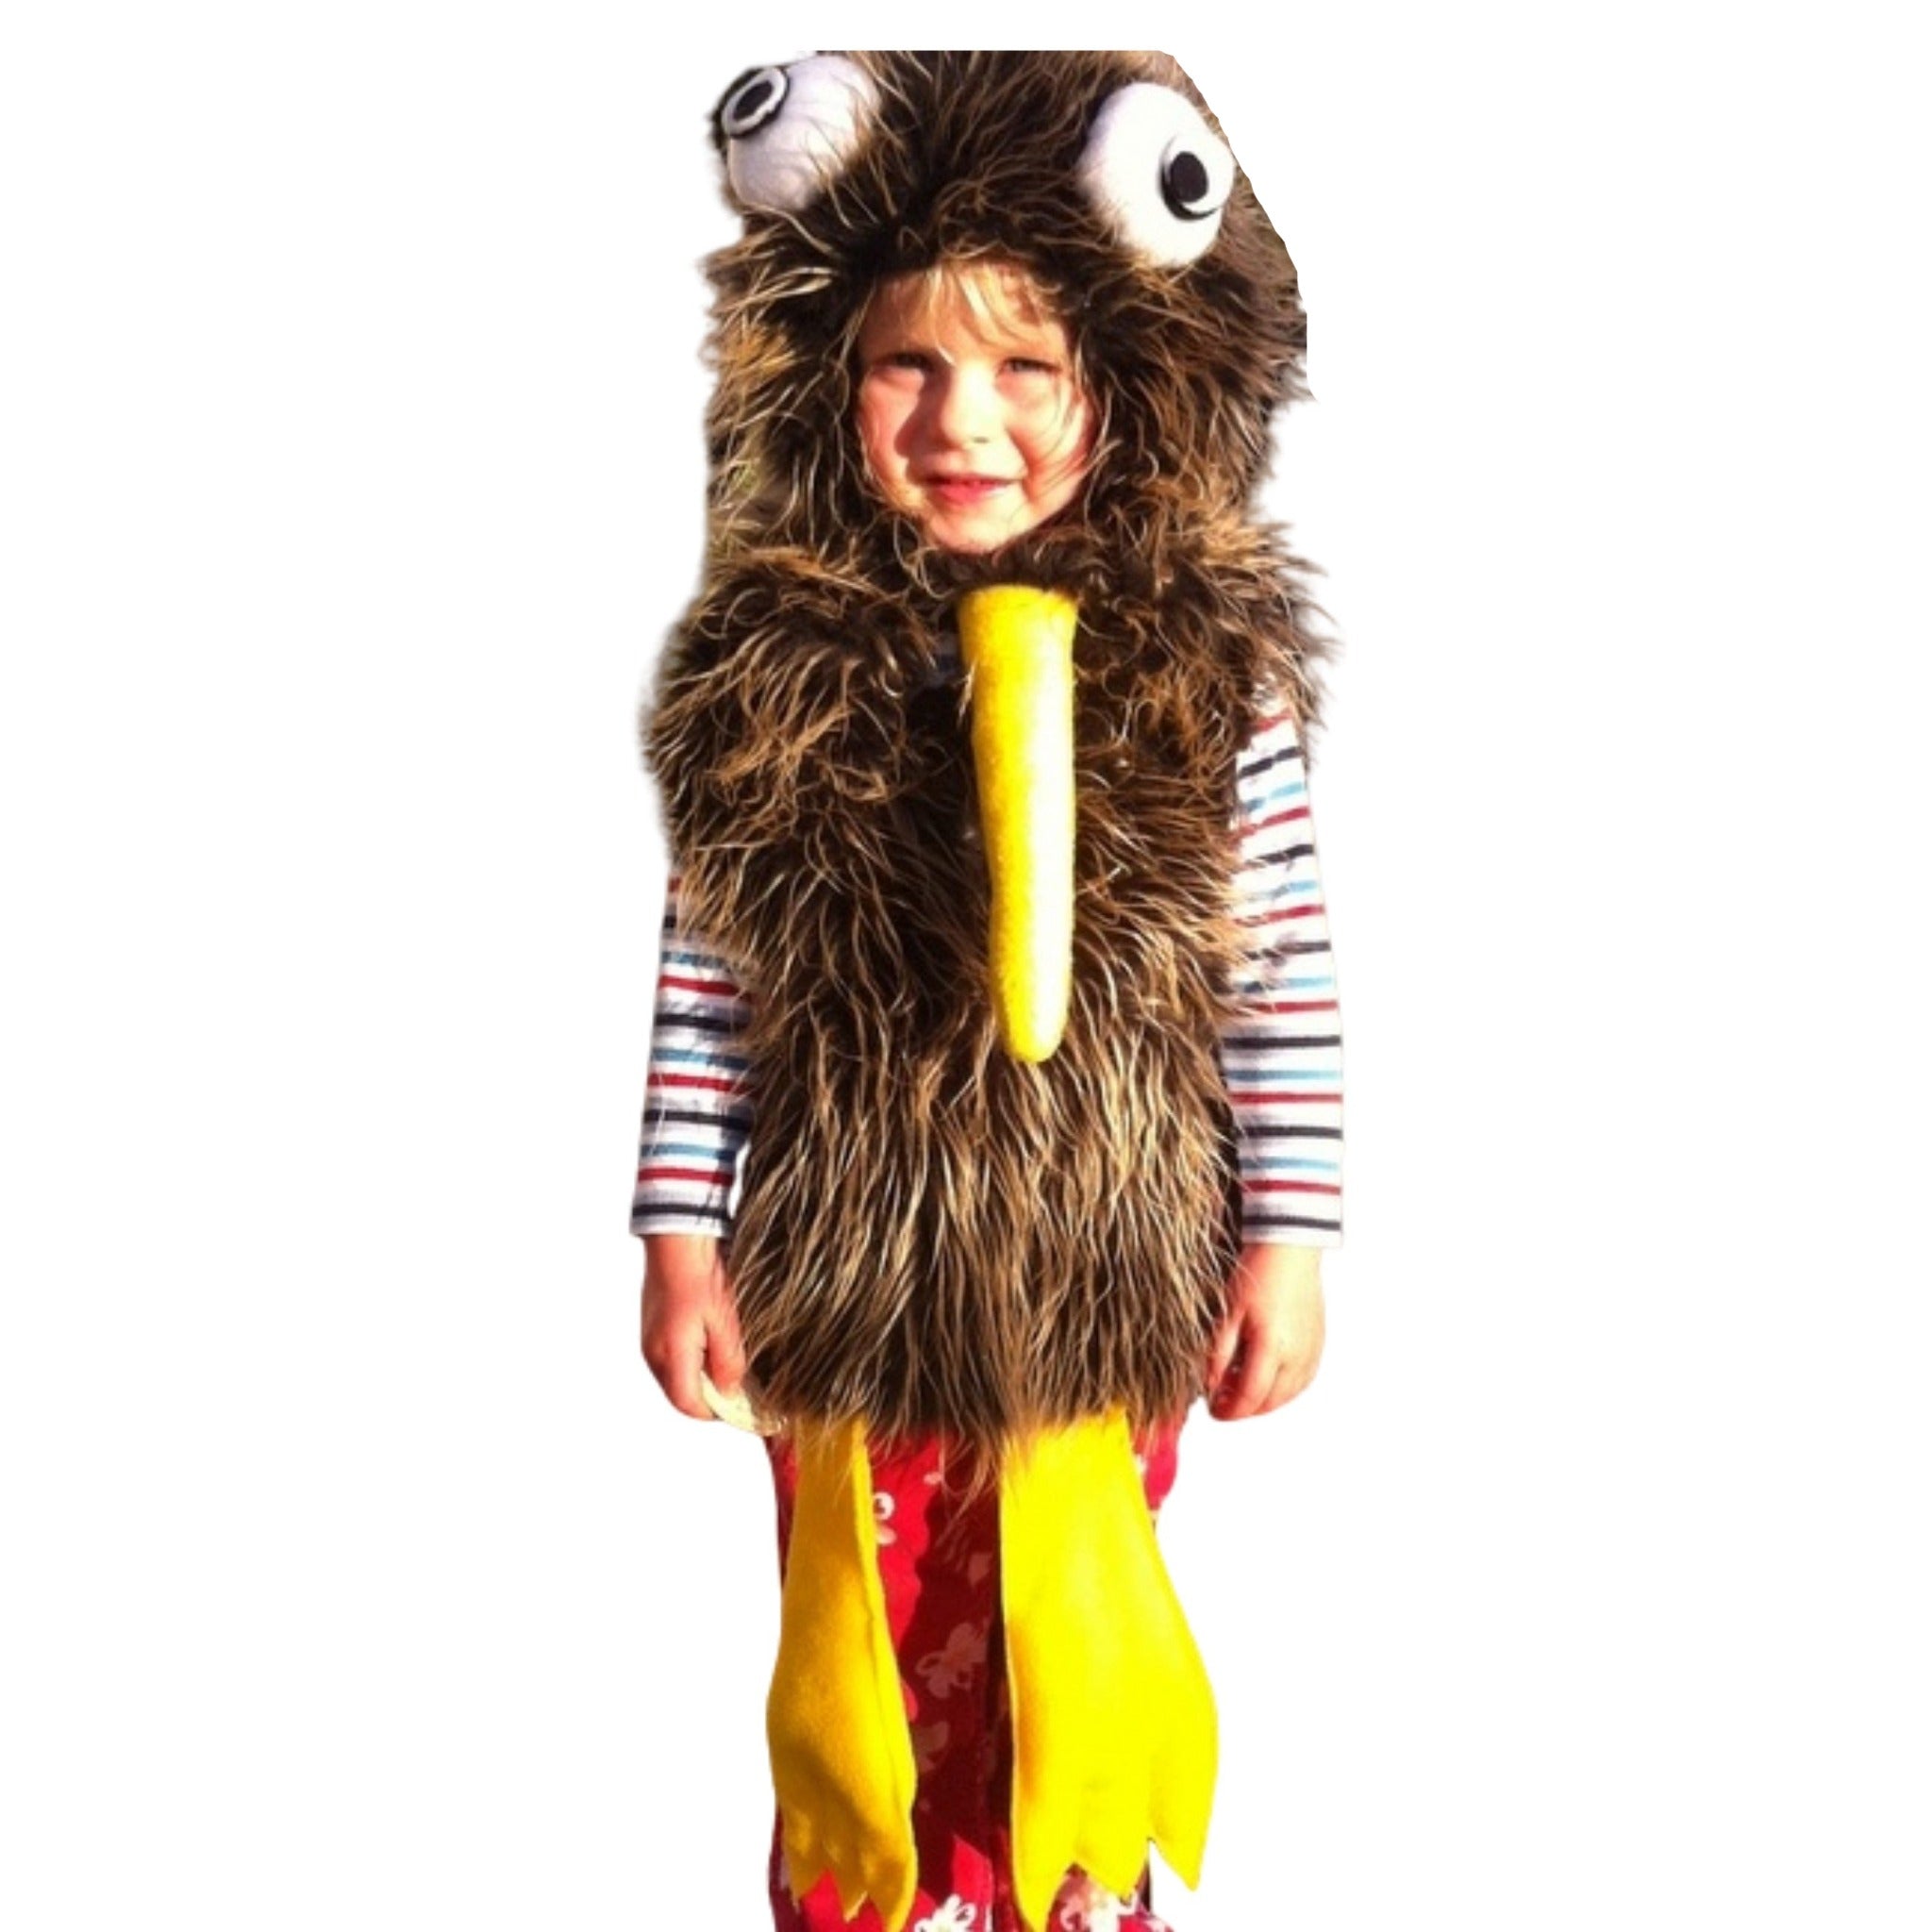 Kiwi Suit for preschoolers dress up